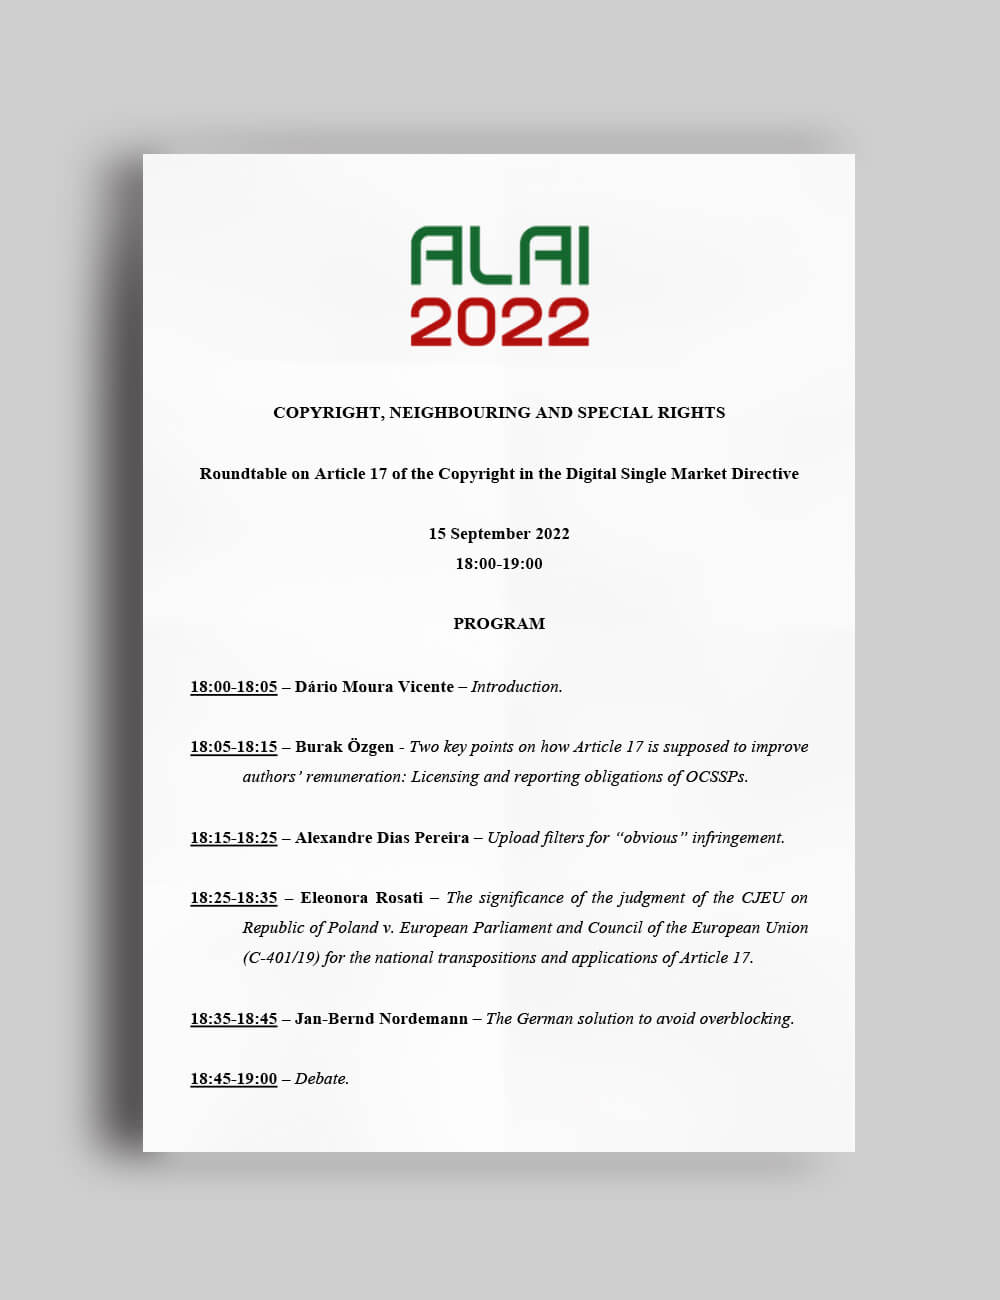 ALAI 2022